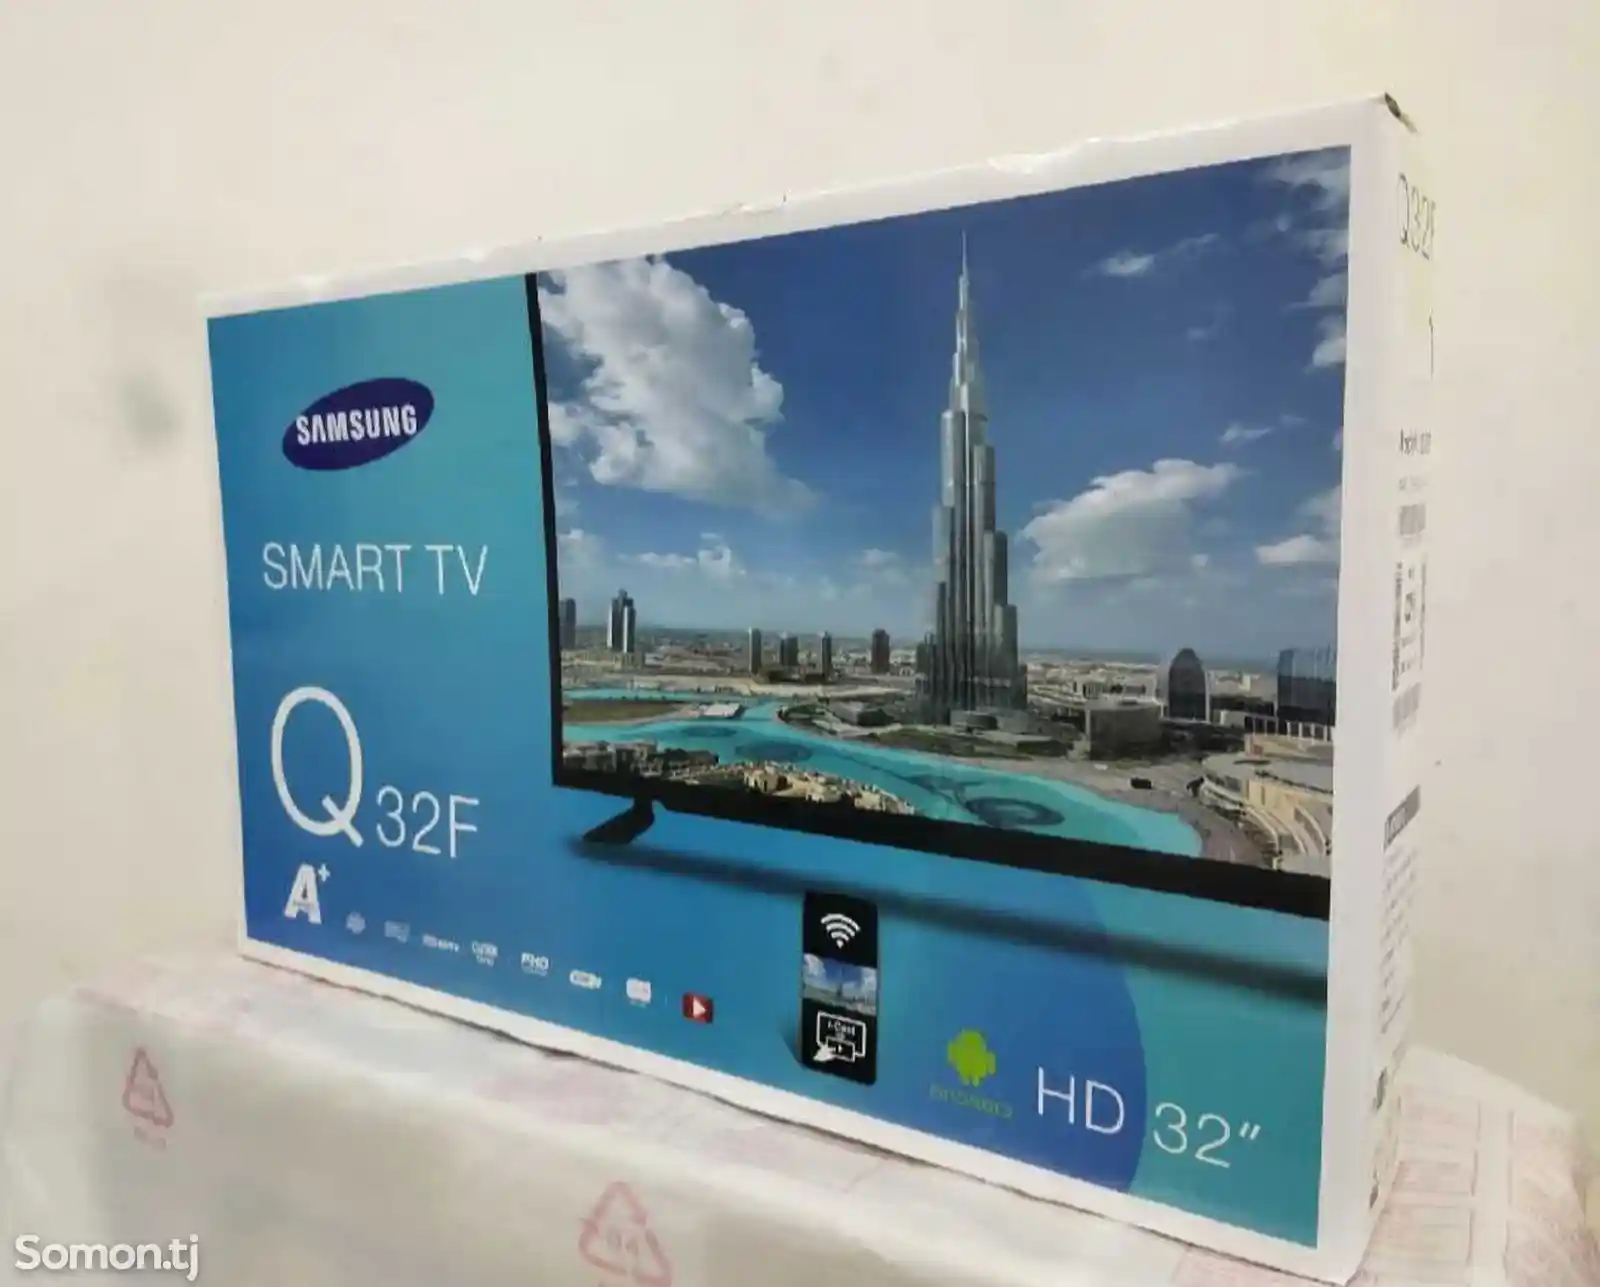 Телевизор Samsung 32 Q32F Android